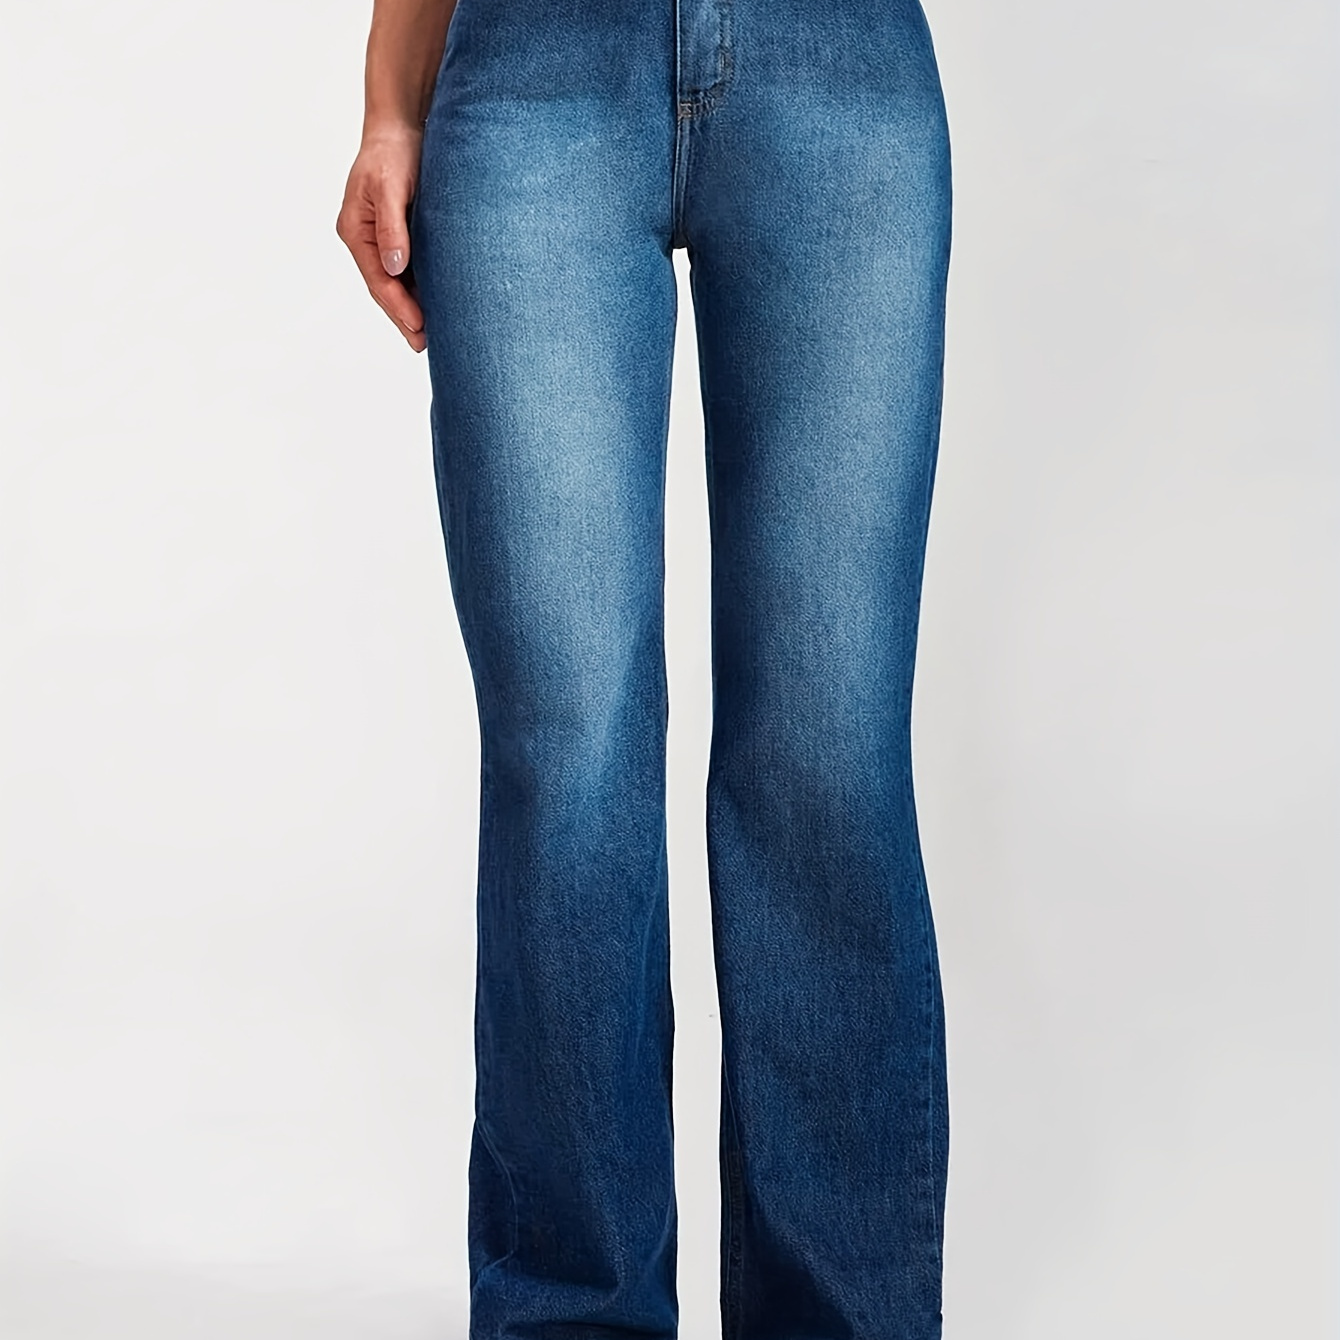 

Blue Loose Slash Pocket Denim Pants, Casual High Rise Washed Staight Leg Jeans, Women's Denim Jeans & Clothing